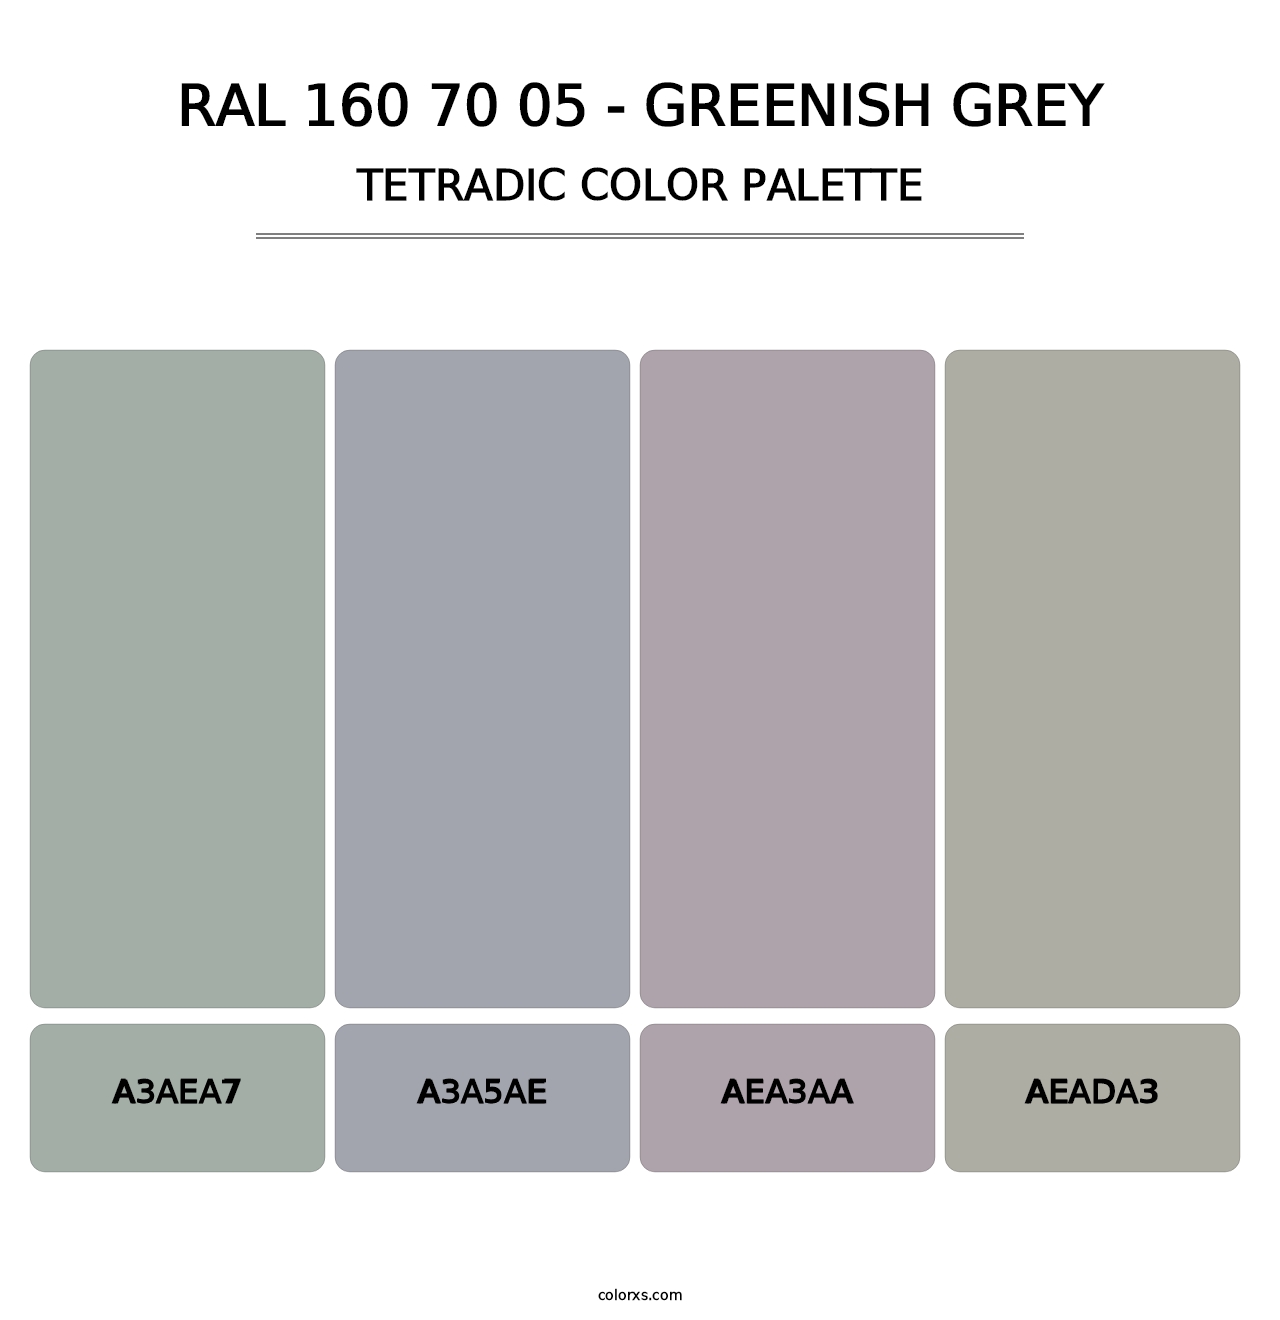 RAL 160 70 05 - Greenish Grey - Tetradic Color Palette